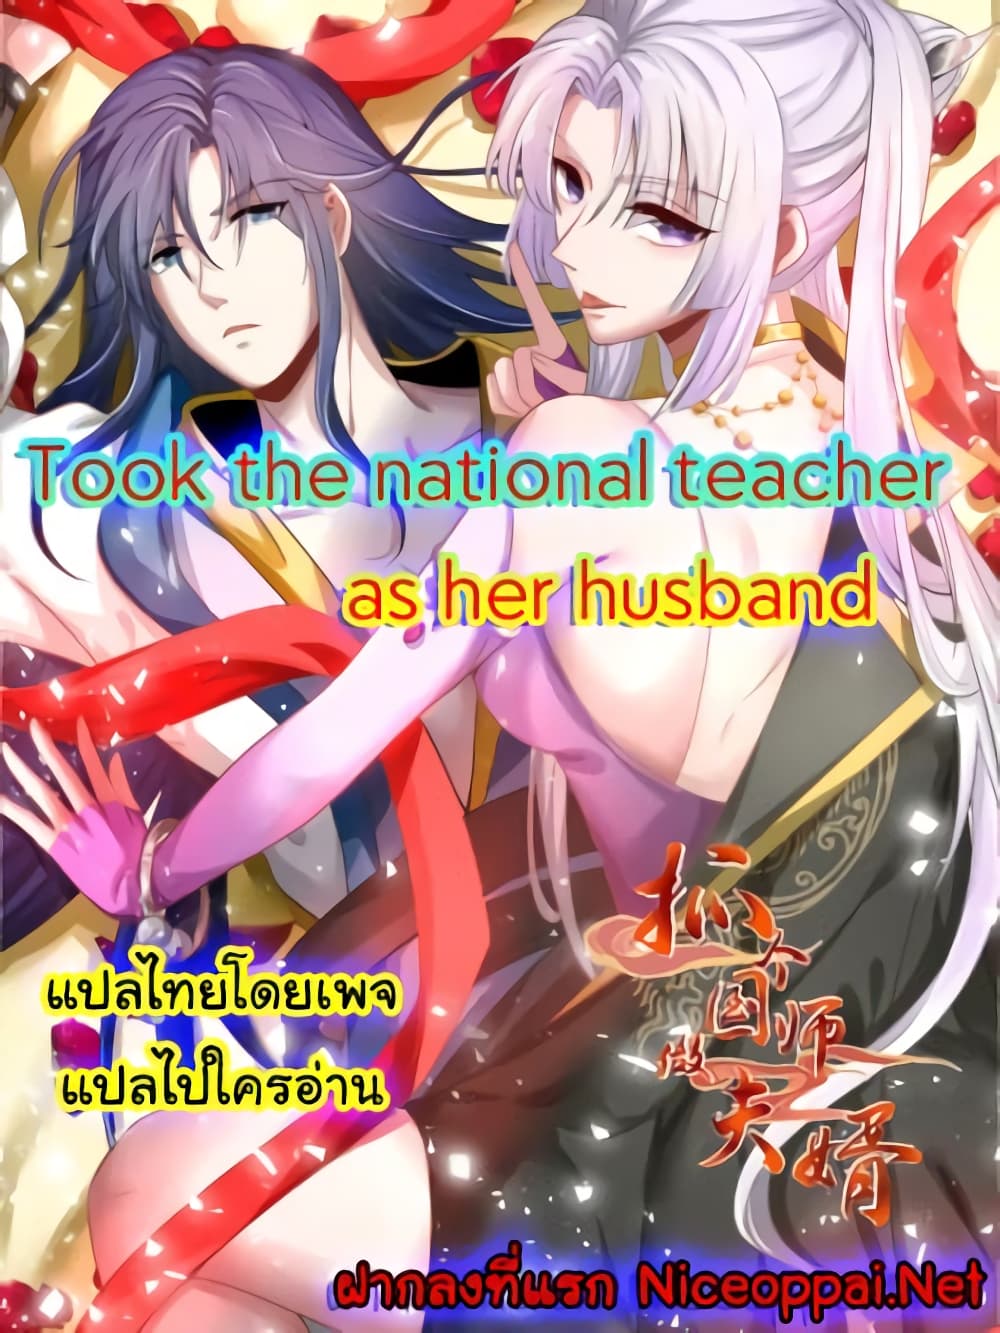 Took the National Teacher as Her Husband 36 (1)